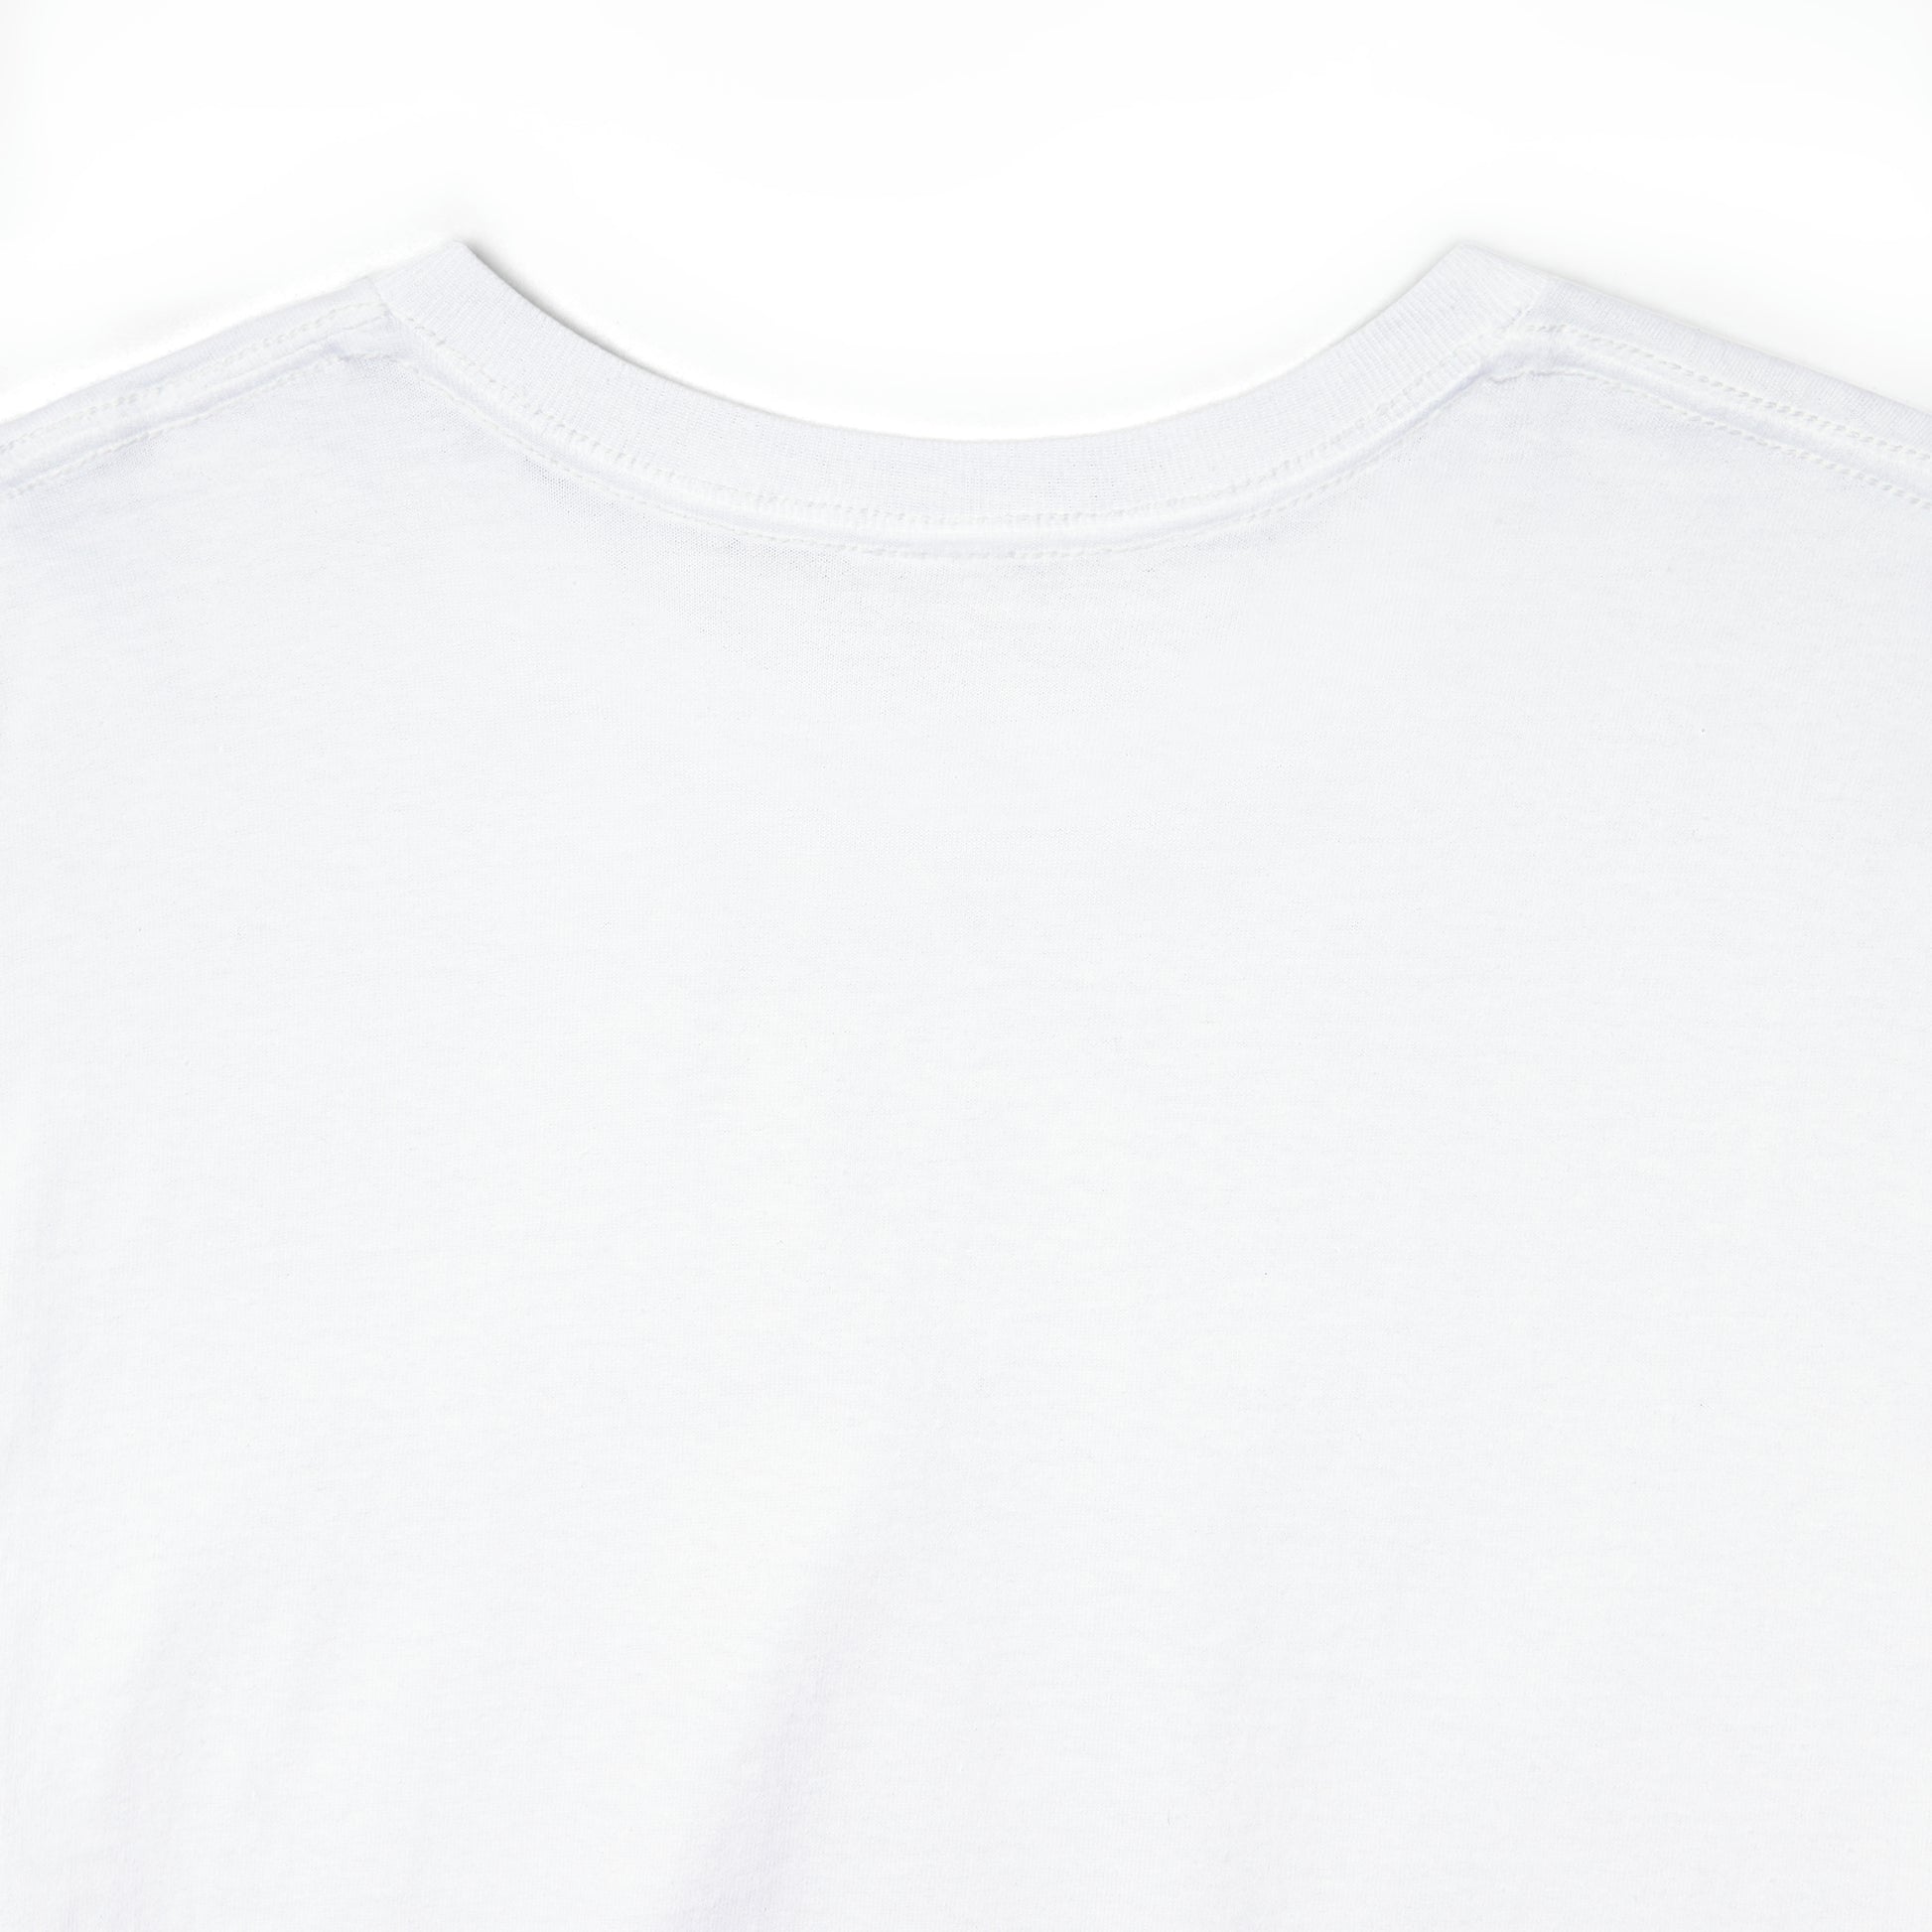 T-shirt Sleeveless shirt Outerwear, Roblox Muscle, tshirt, white